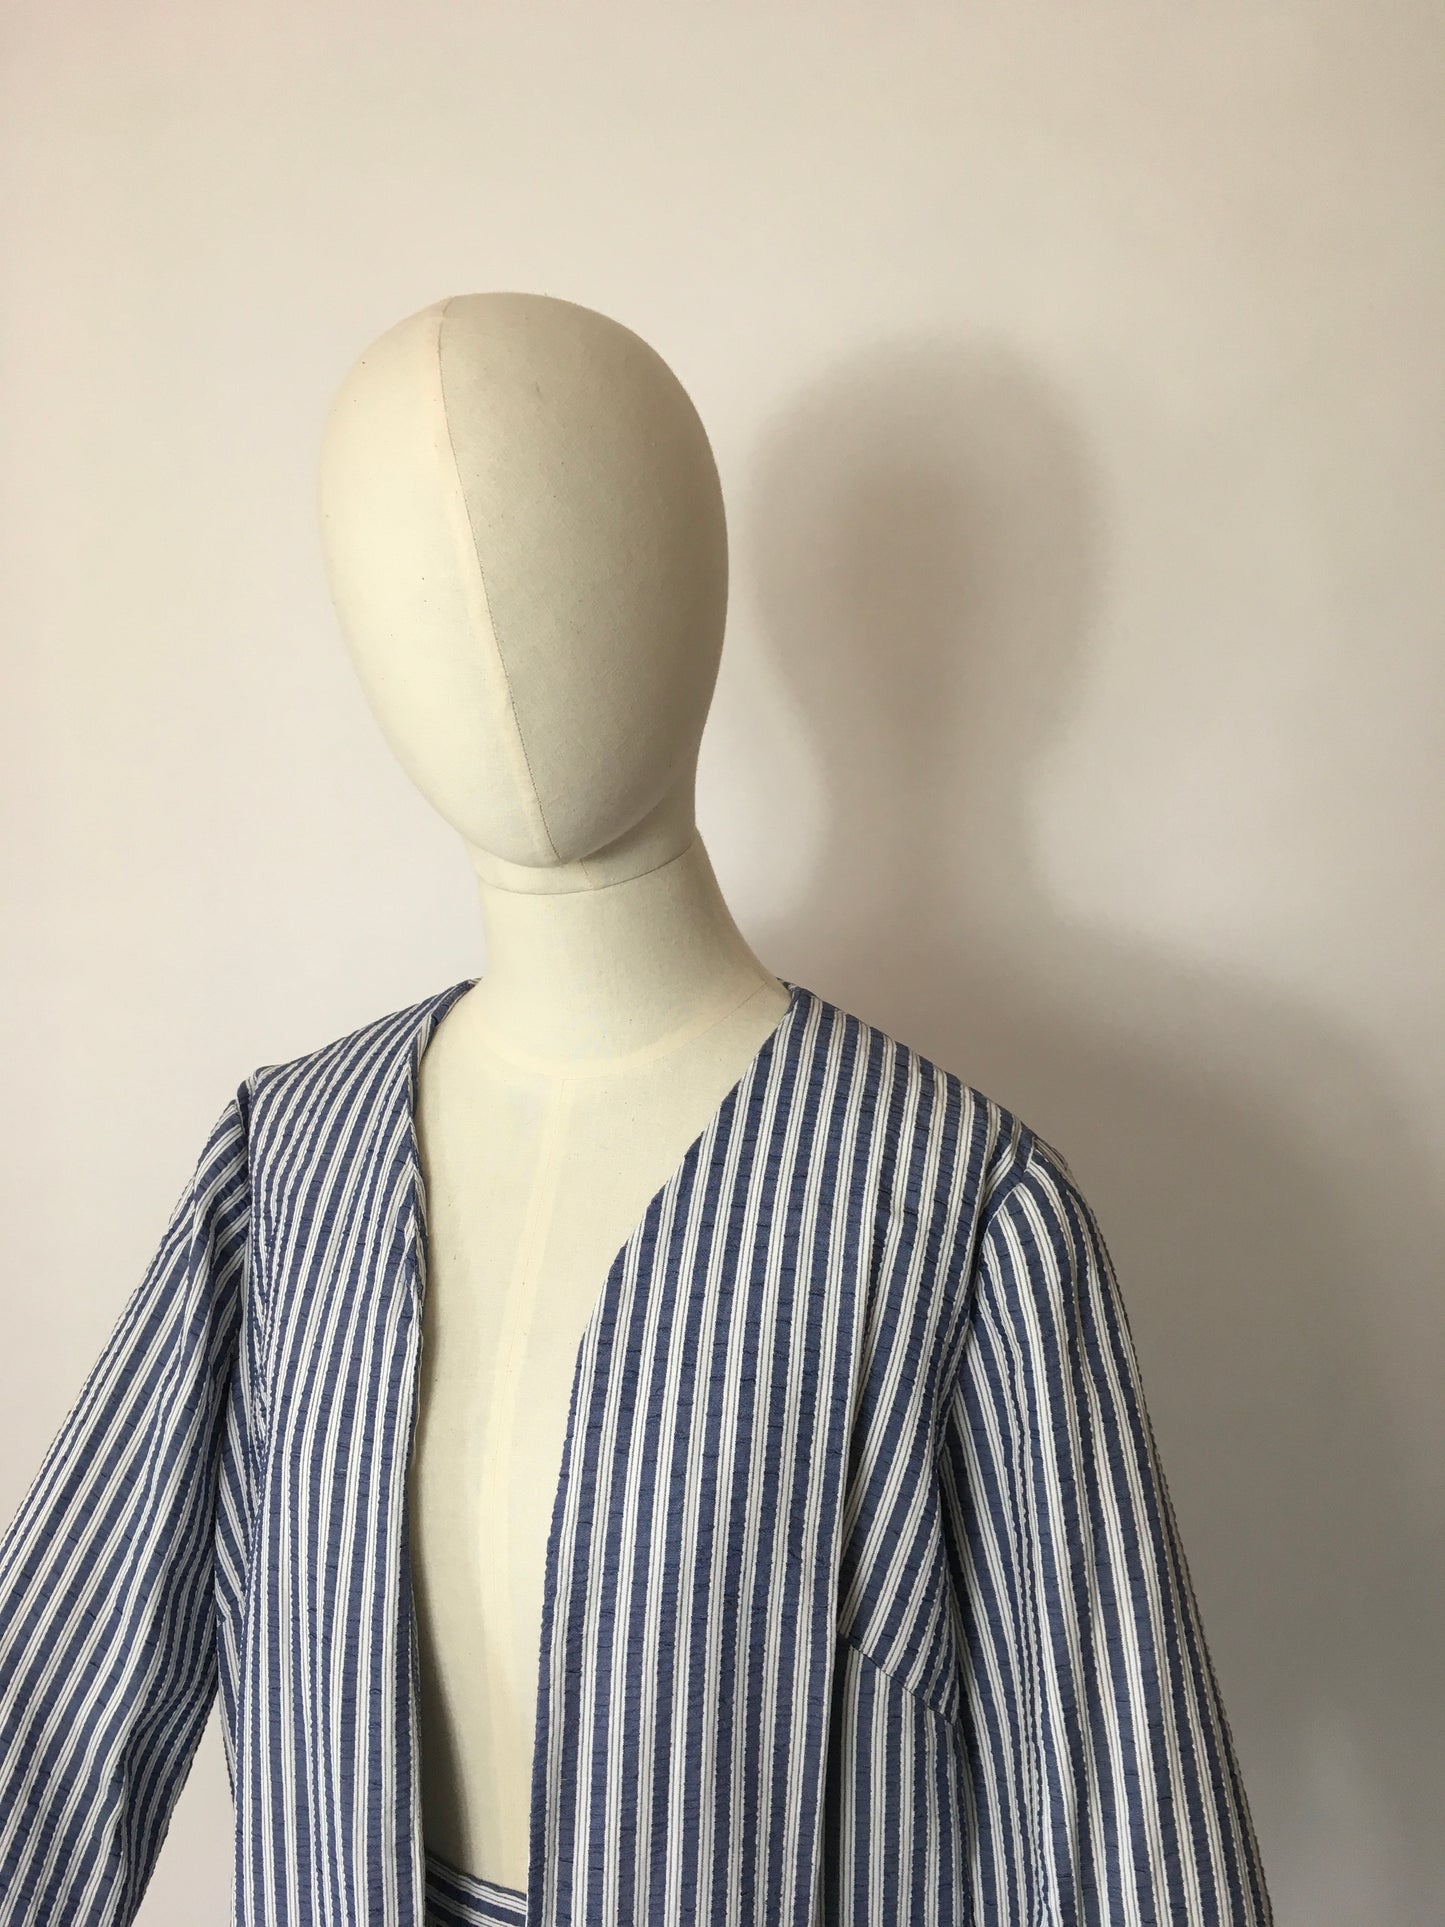 Original 1950s Summer Suit In a lovely Lightweight Seersucker fabric - Blue & White Stripes